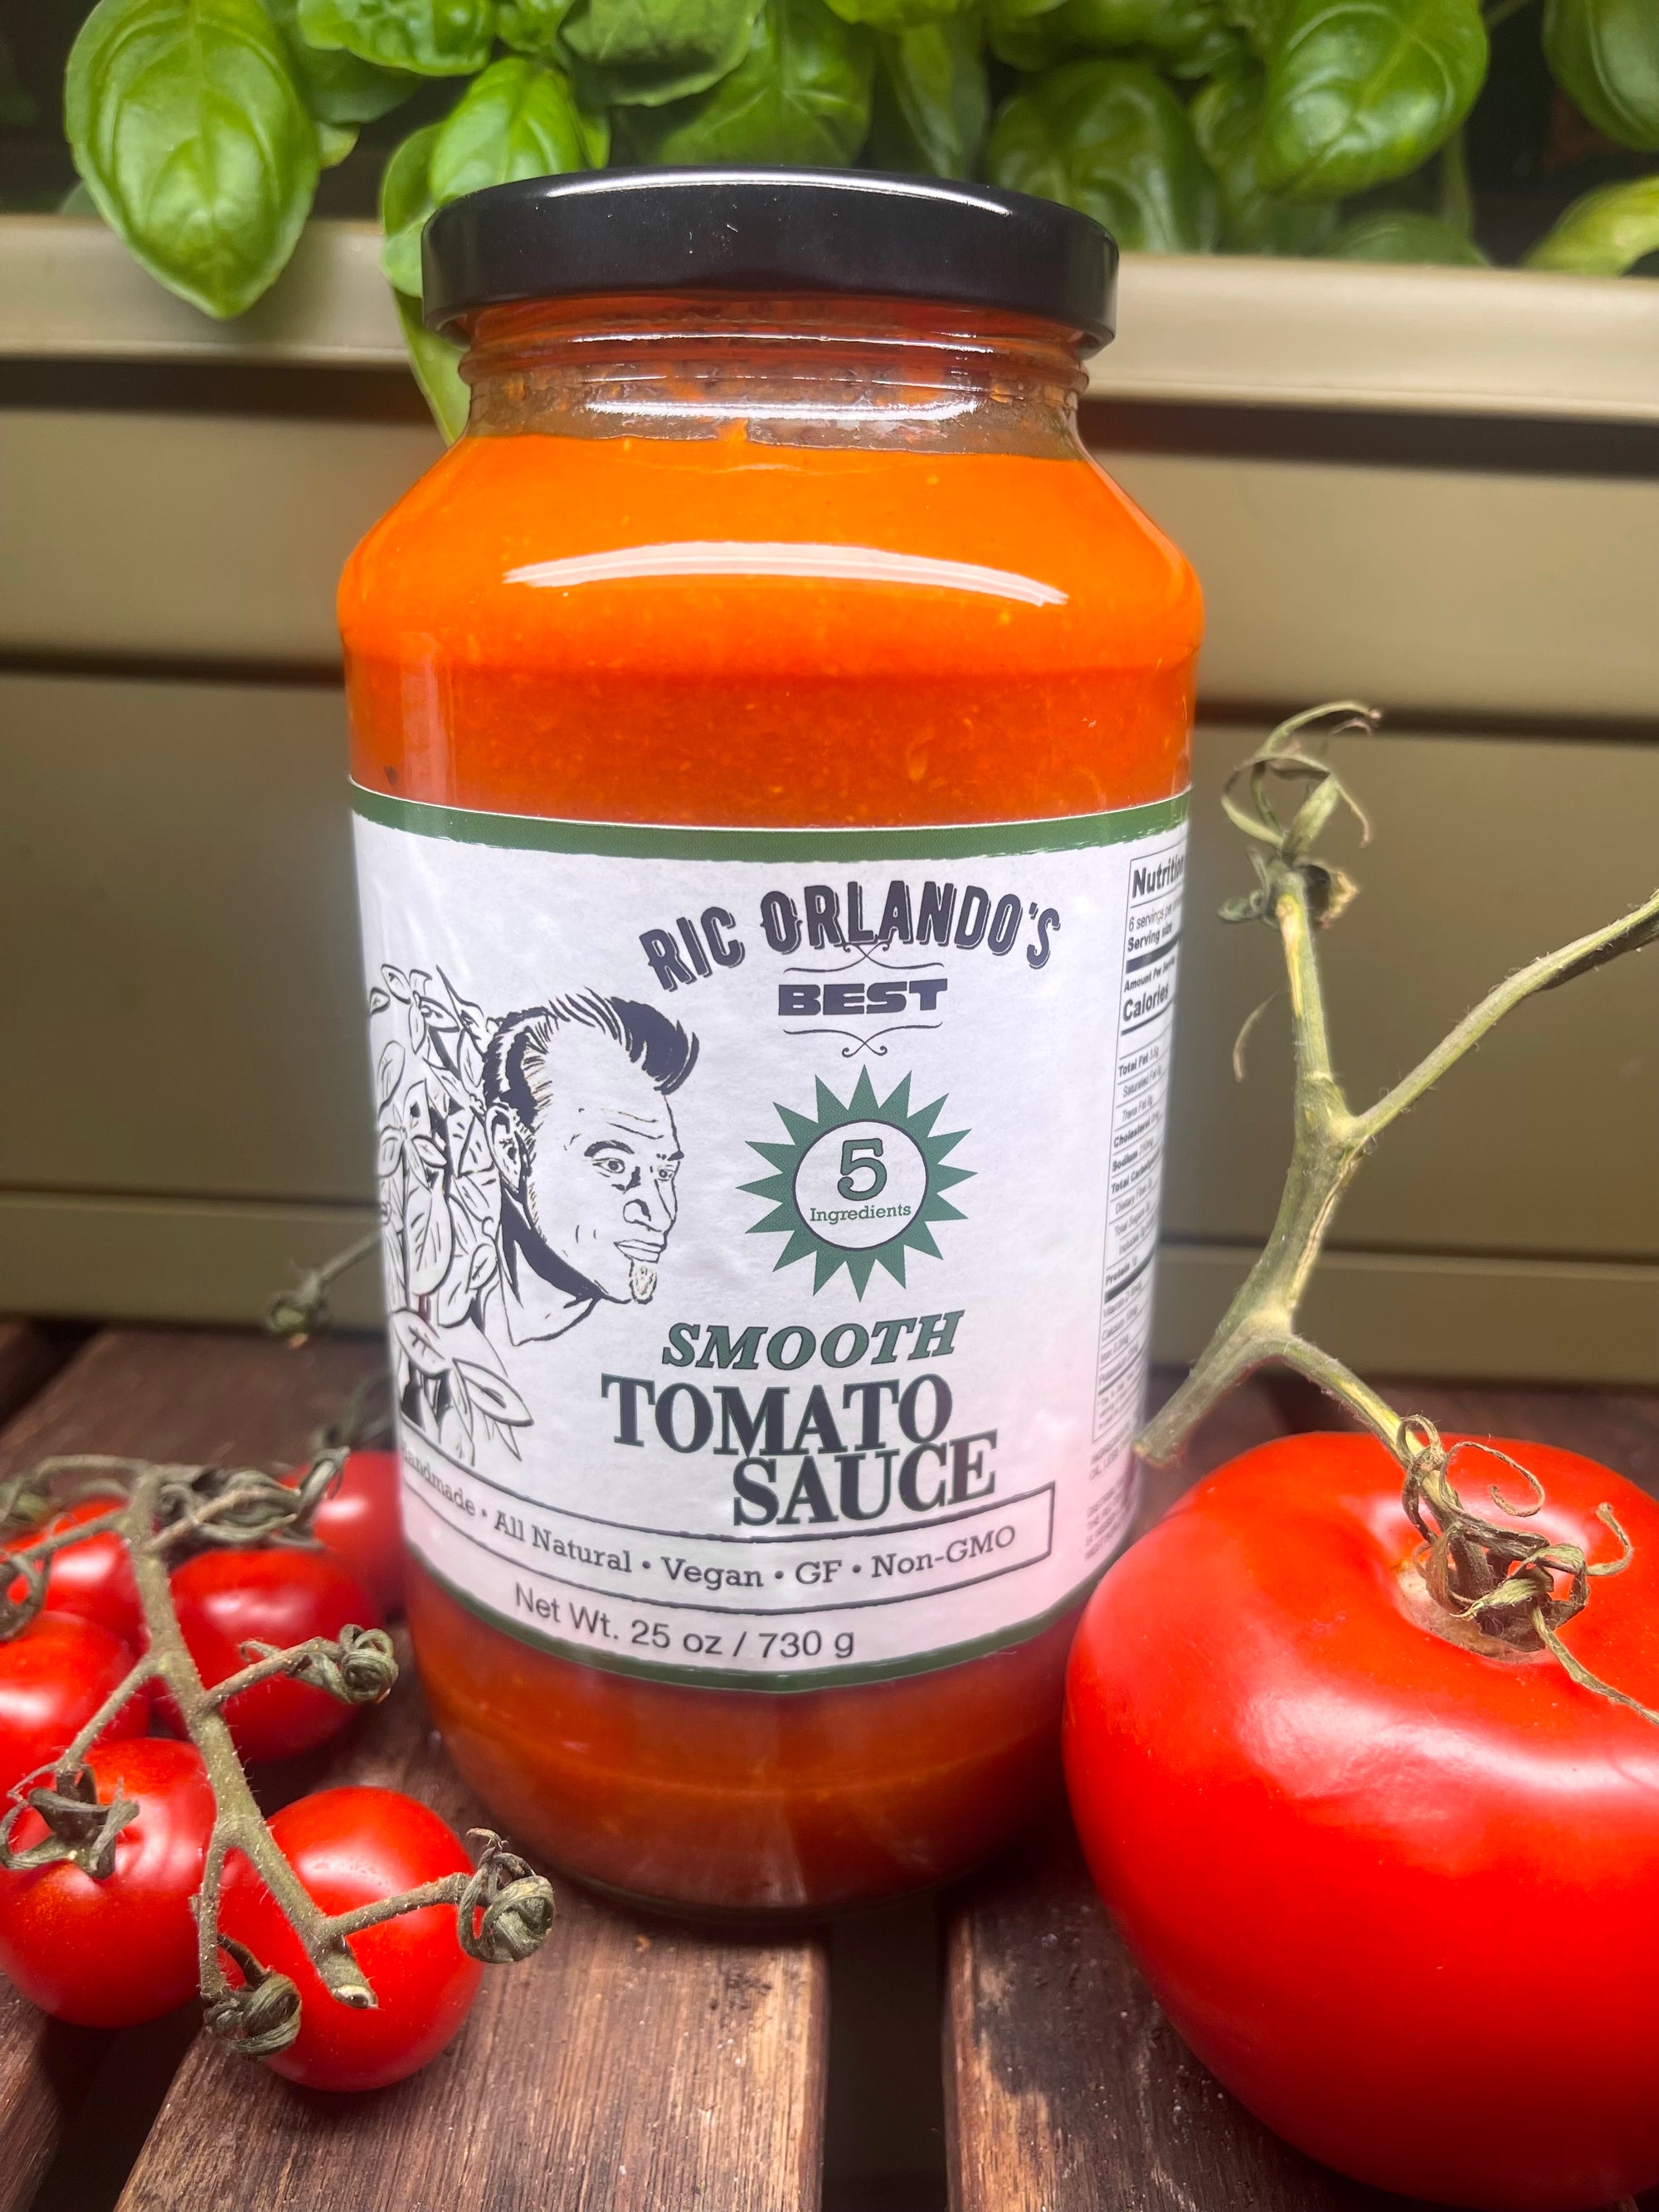 Ric Orlando's Best Smooth Tomato Sauce